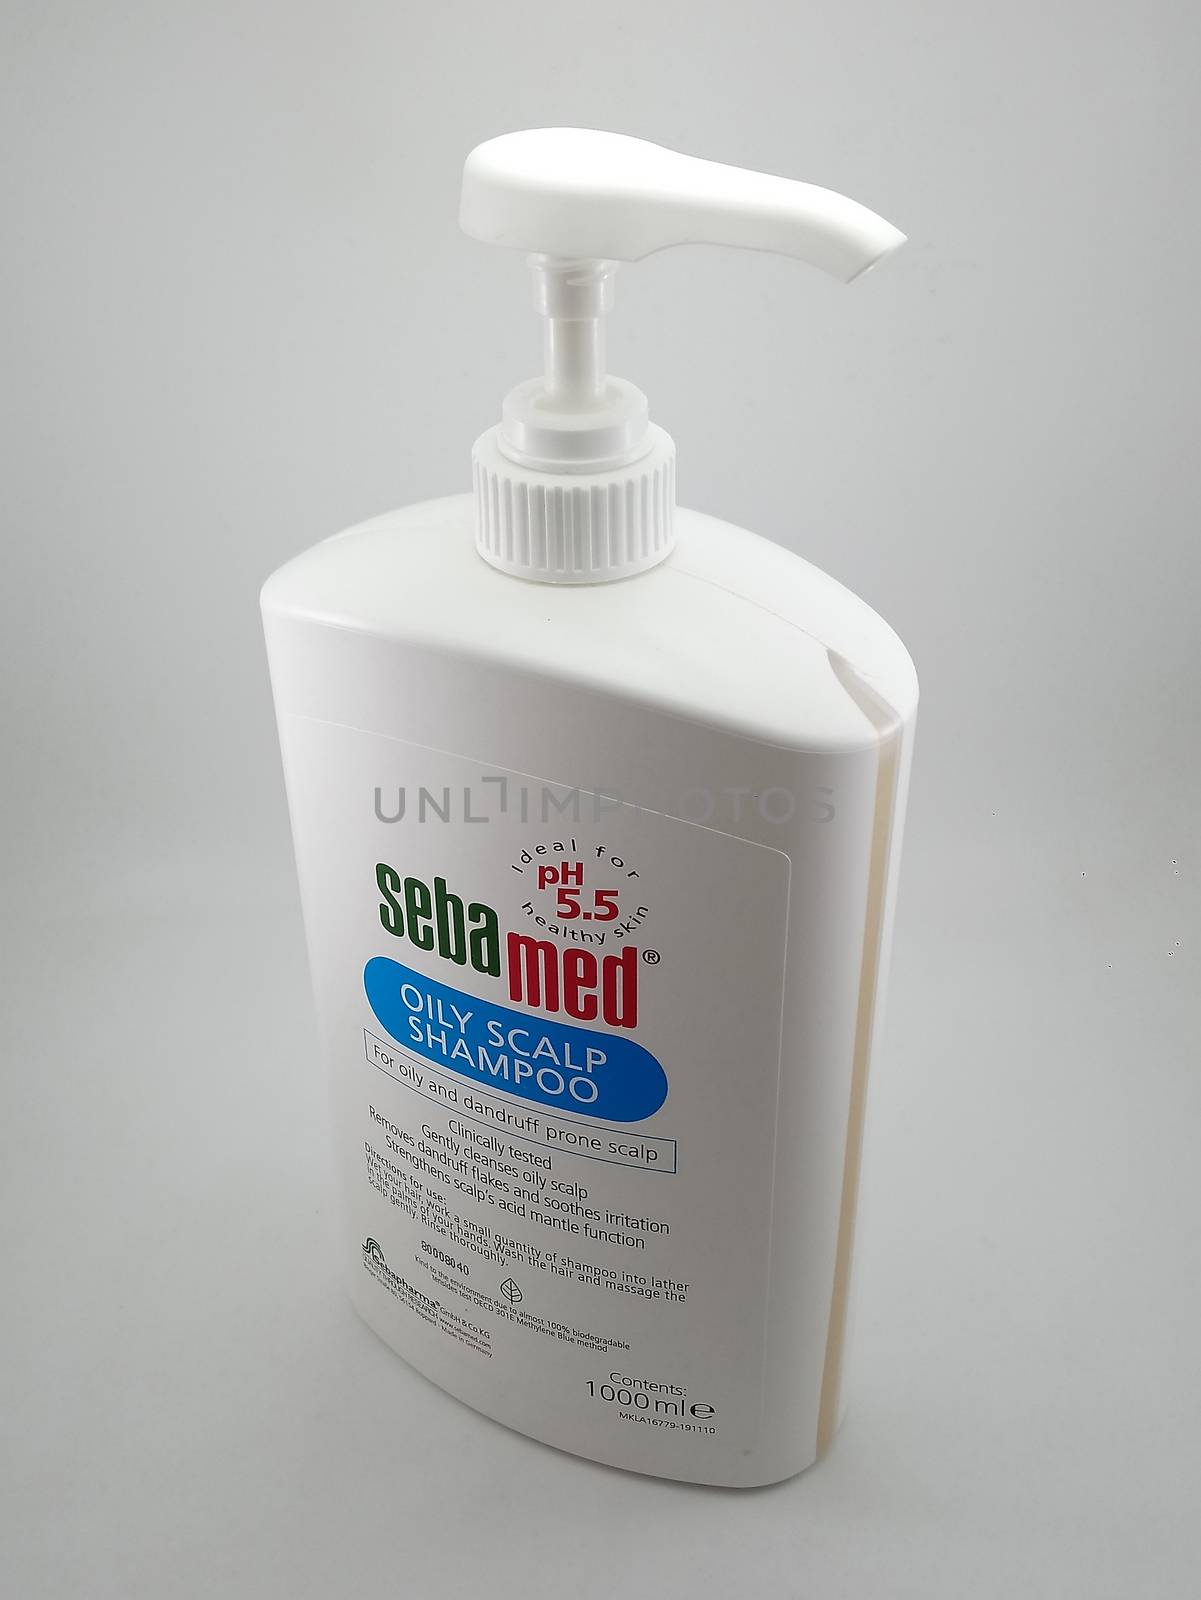 MANILA, PH - SEPT 24 - Seba med oily scalp shampoo on September 24, 2020 in Manila, Philippines.